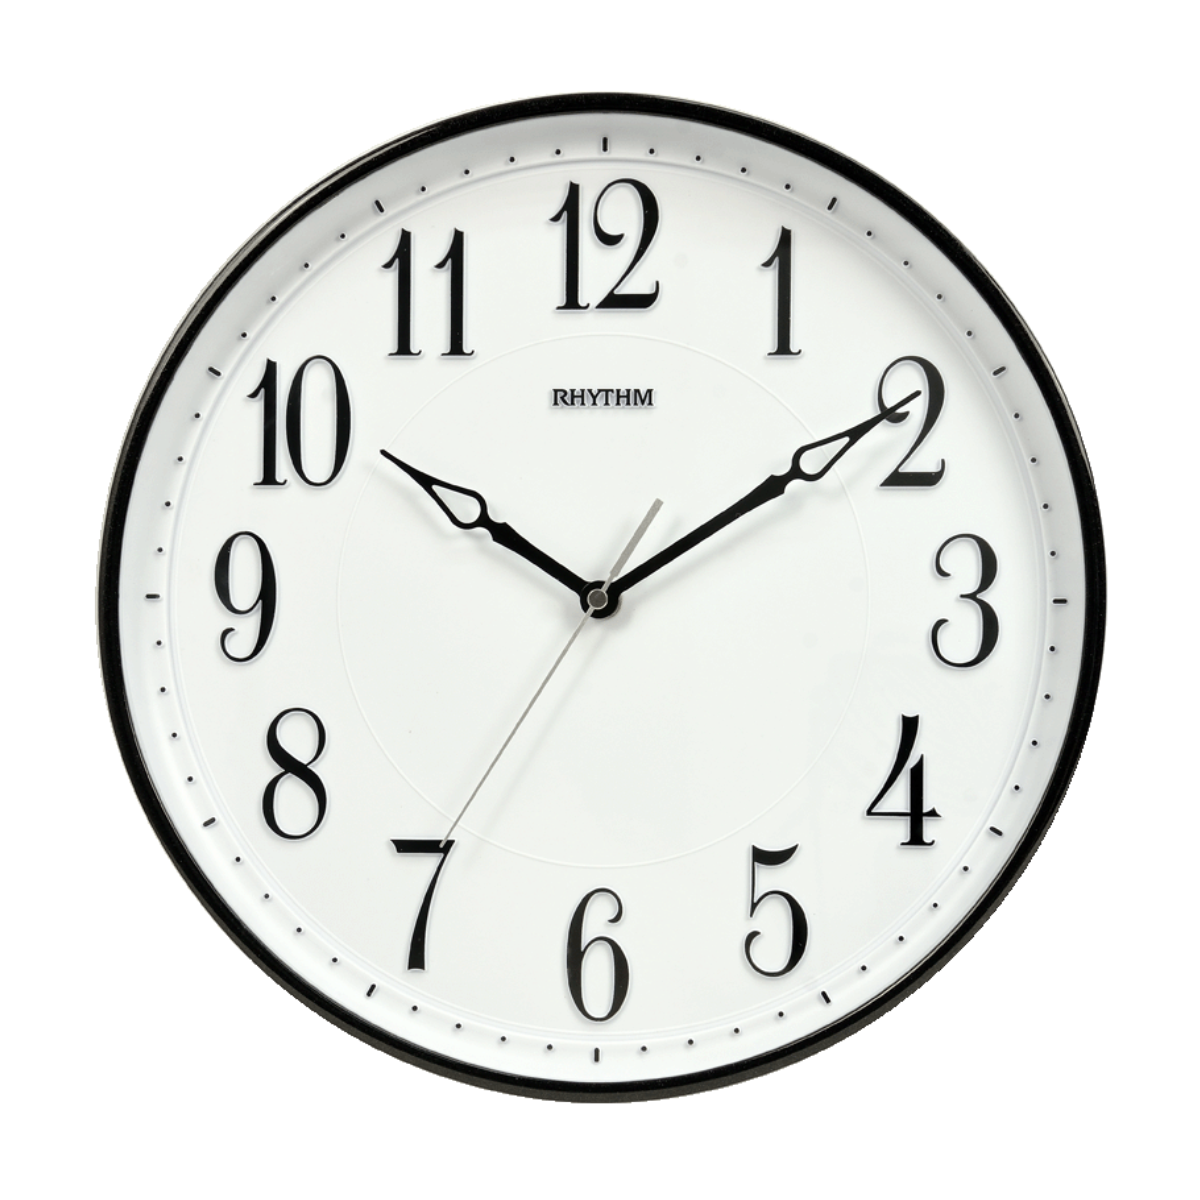 Rhythm CMG580NR02 Value Added Silent Silky Move Wall Clock (Singapore Clocks)